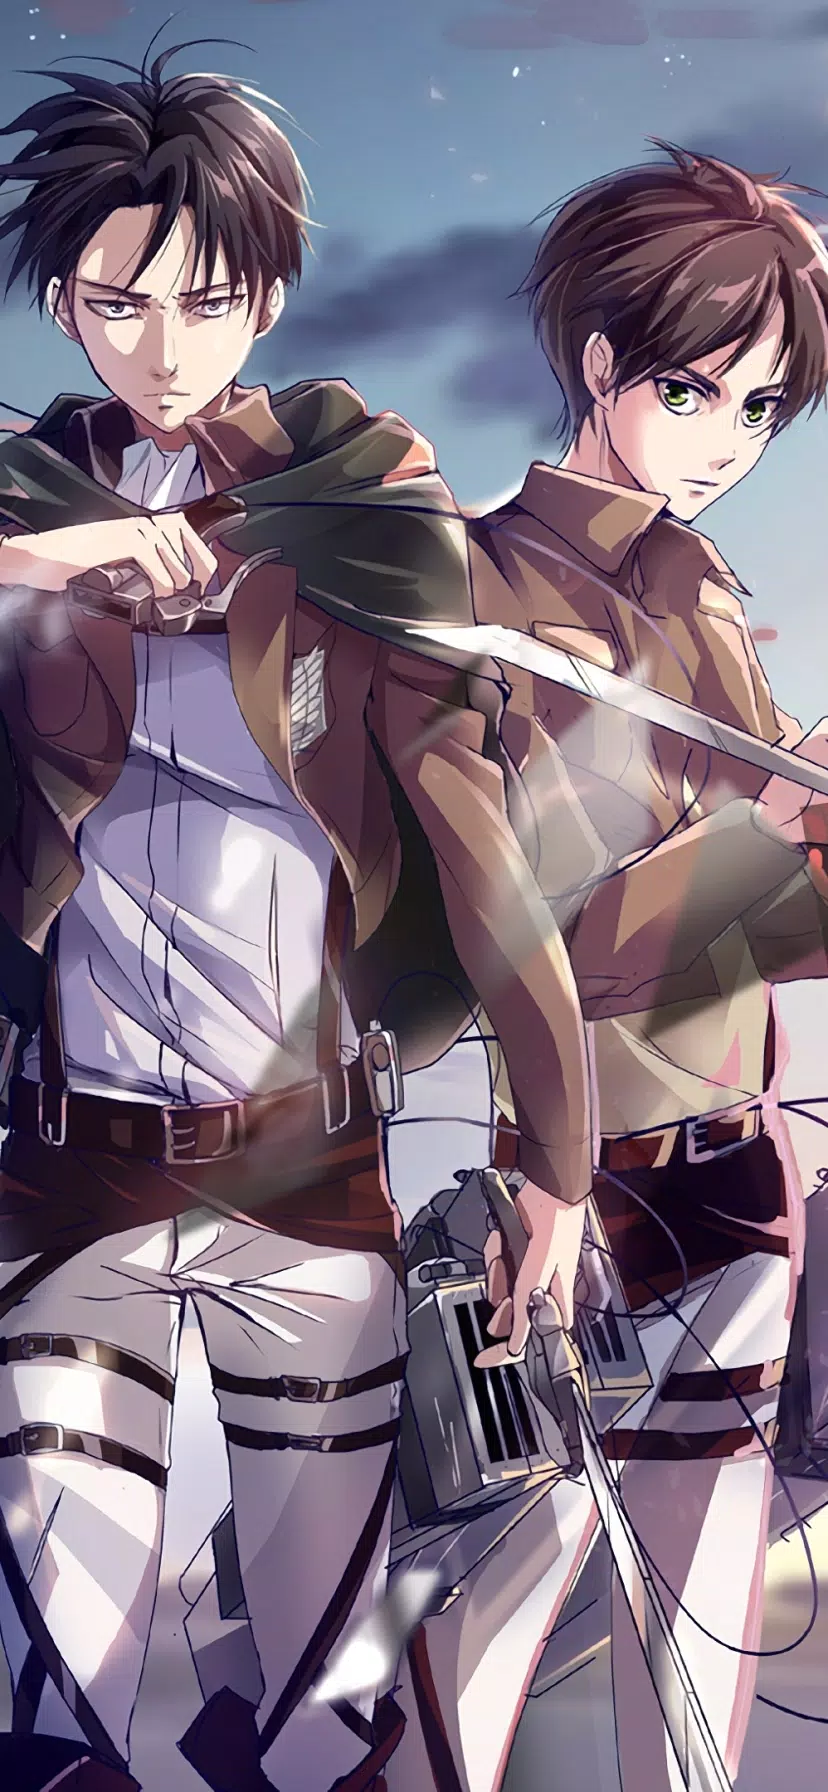 Attack on Titan Wallpaper HD - Shingeki no Kyojin APK for Android Download